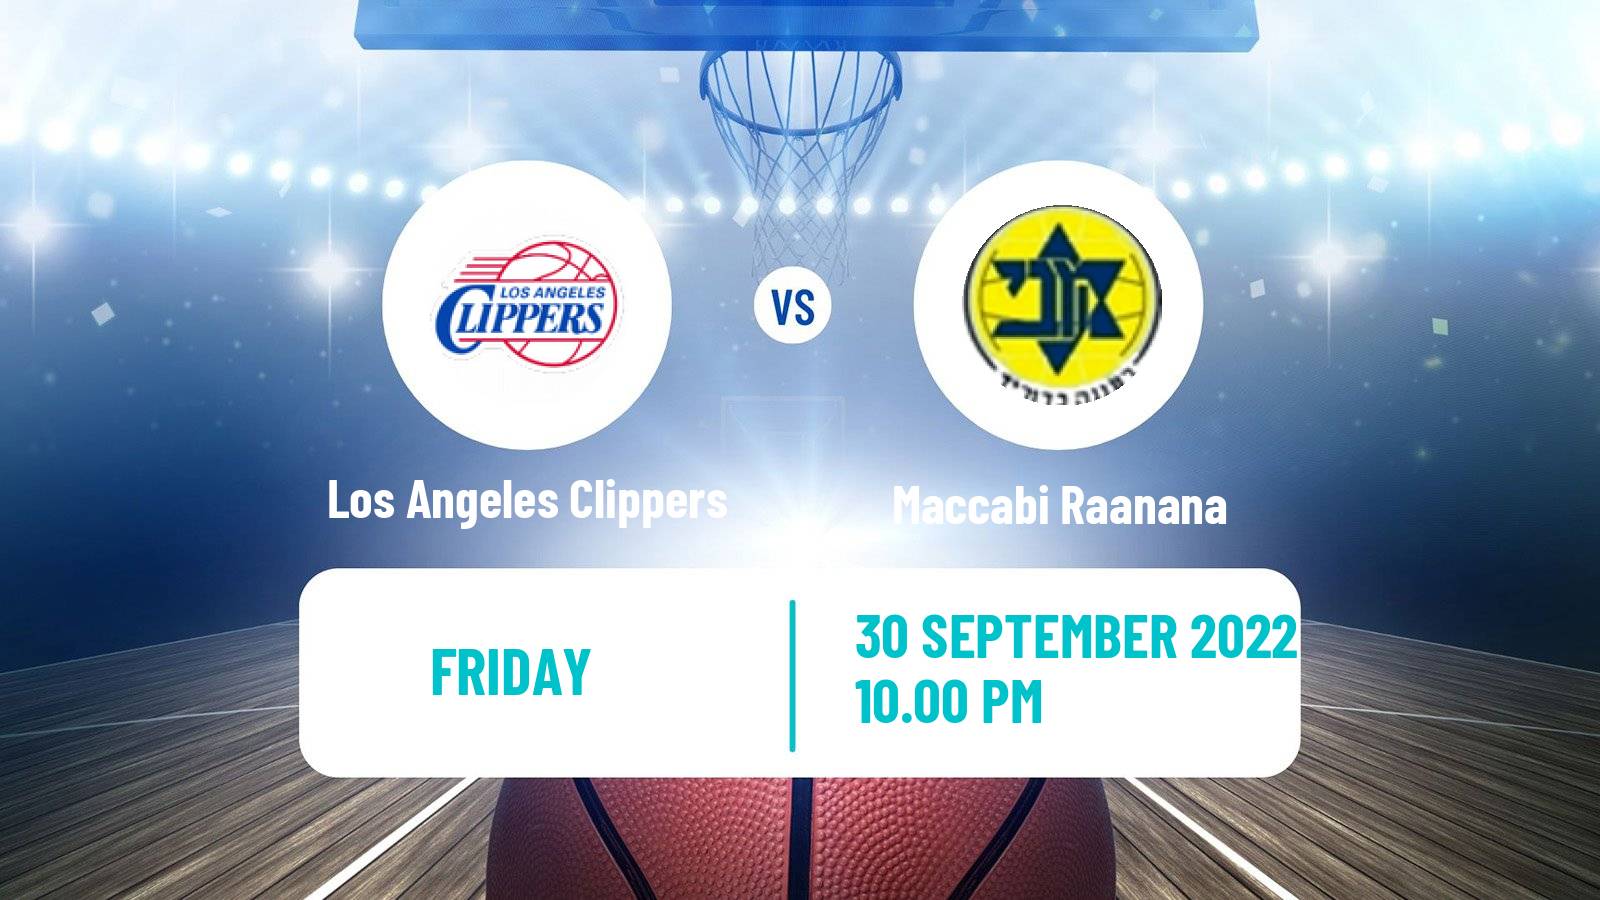 Basketball Club Friendly Basketball Los Angeles Clippers - Maccabi Raanana